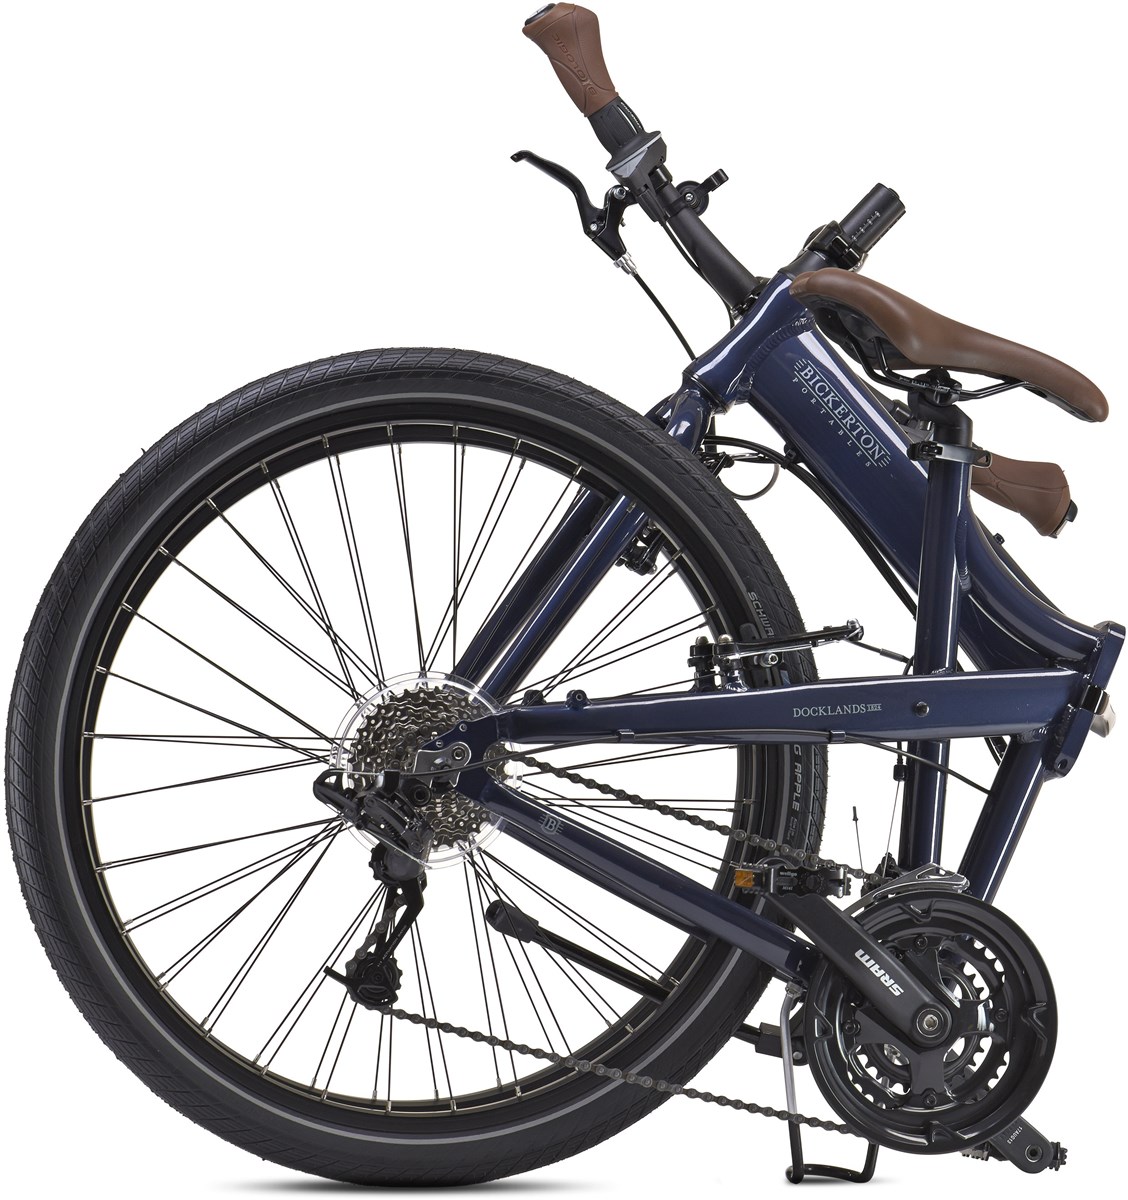 Bickerton Docklands 1824 Country 2016 Folding Bike